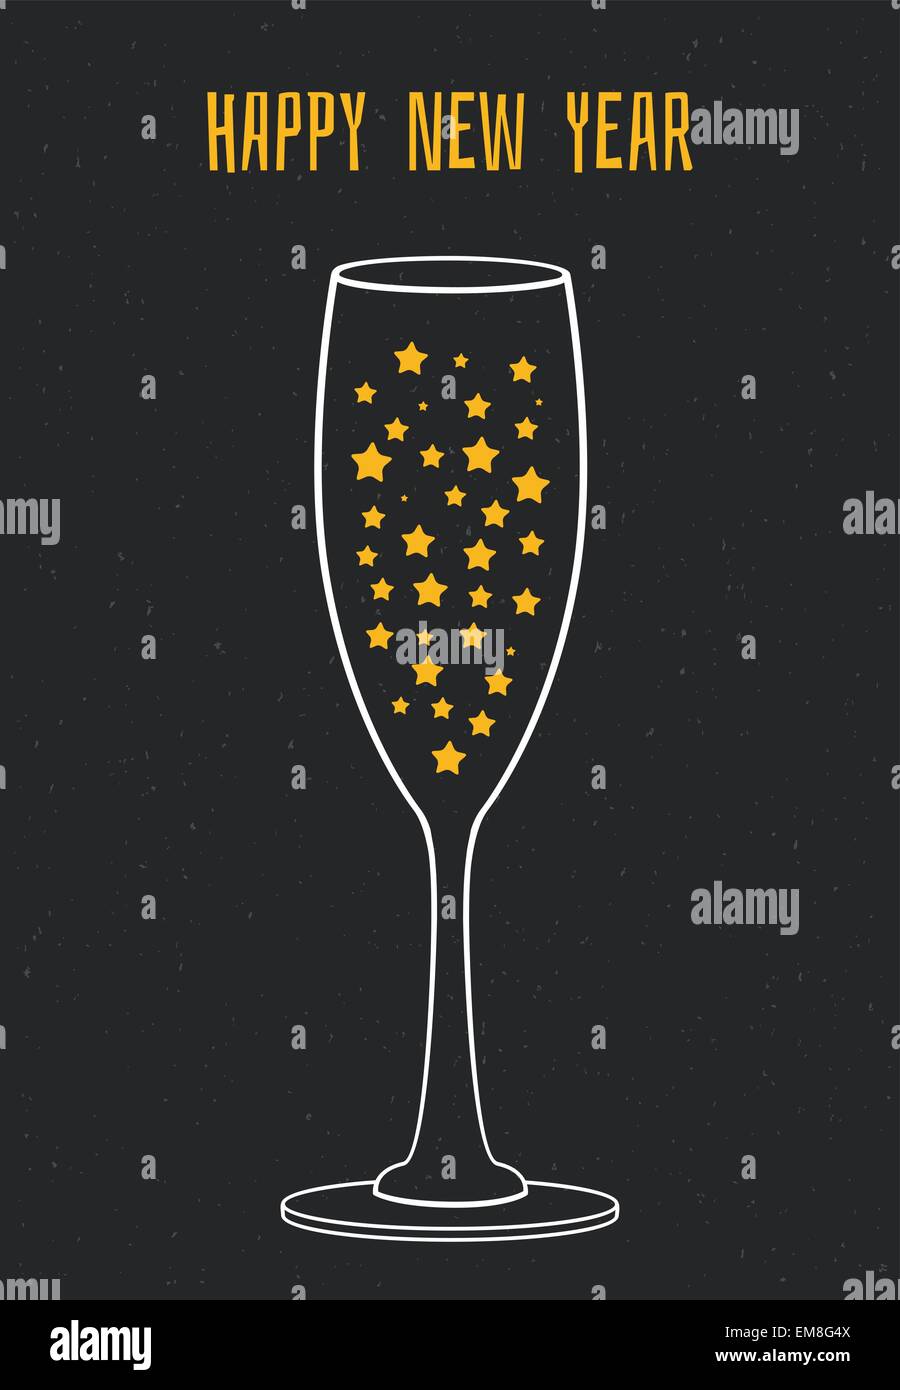 https://c8.alamy.com/compes/em8g4x/copa-de-champan-con-las-estrellas-em8g4x.jpg